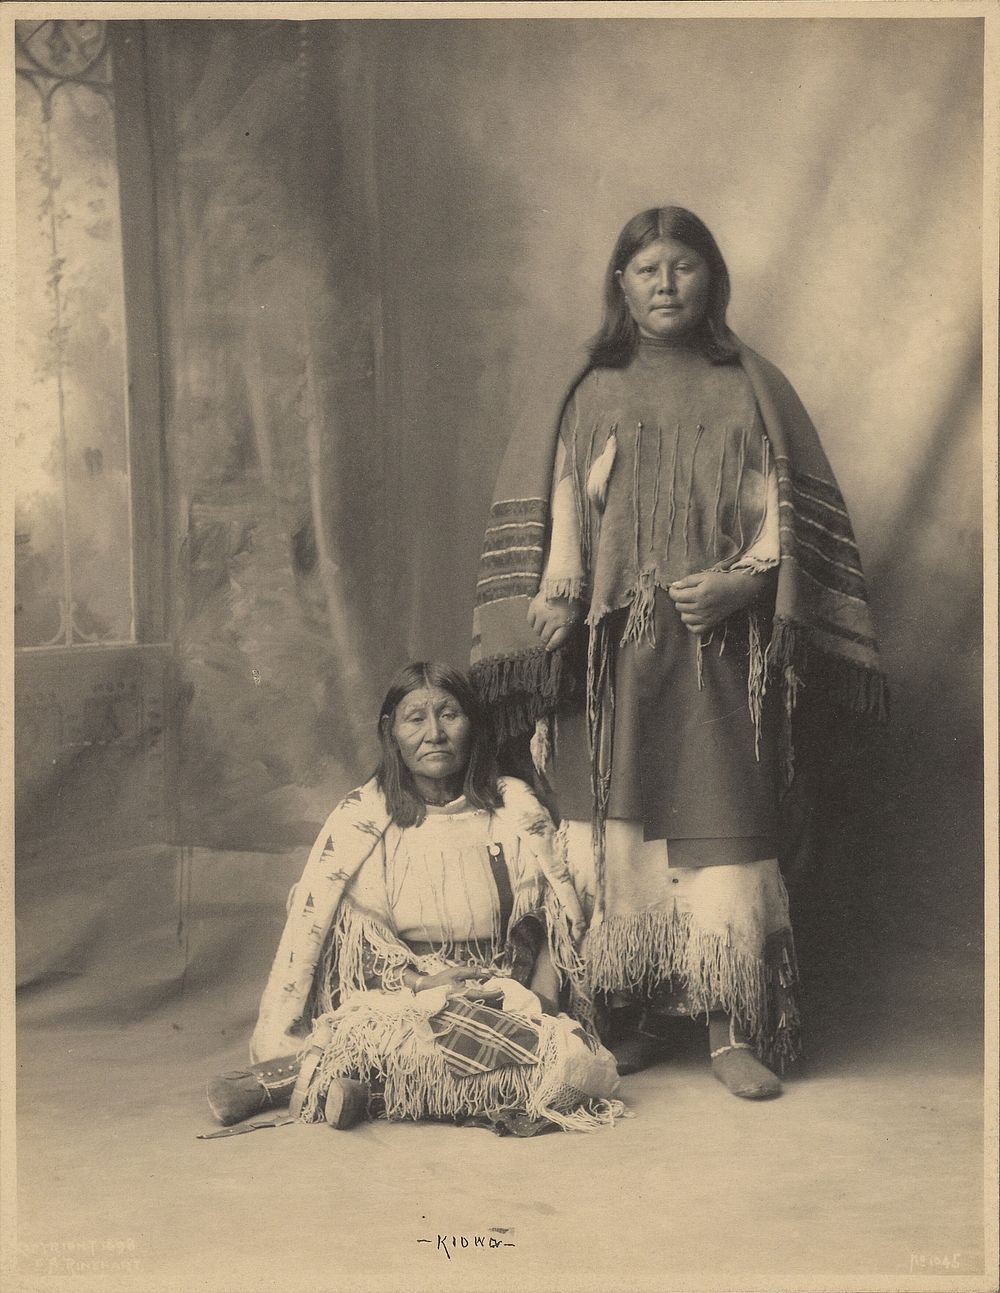 Kiowa [Two Women] by Adolph F Muhr and Frank A Rinehart